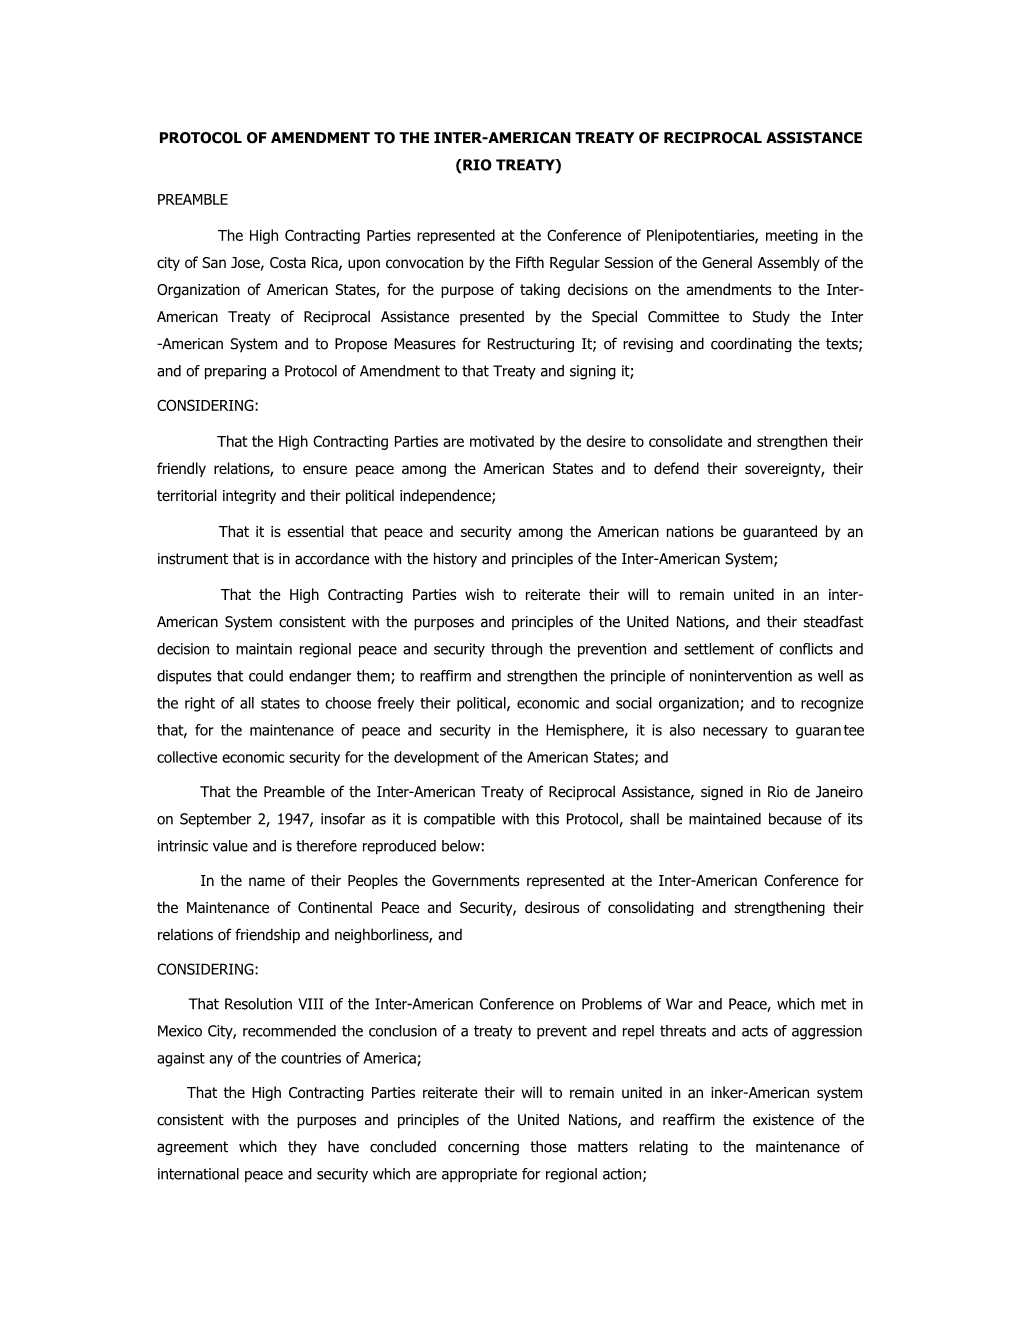 Protocol of Amendment to the Inter-American Treaty of Reciprocal Assistance (Rio Treaty)